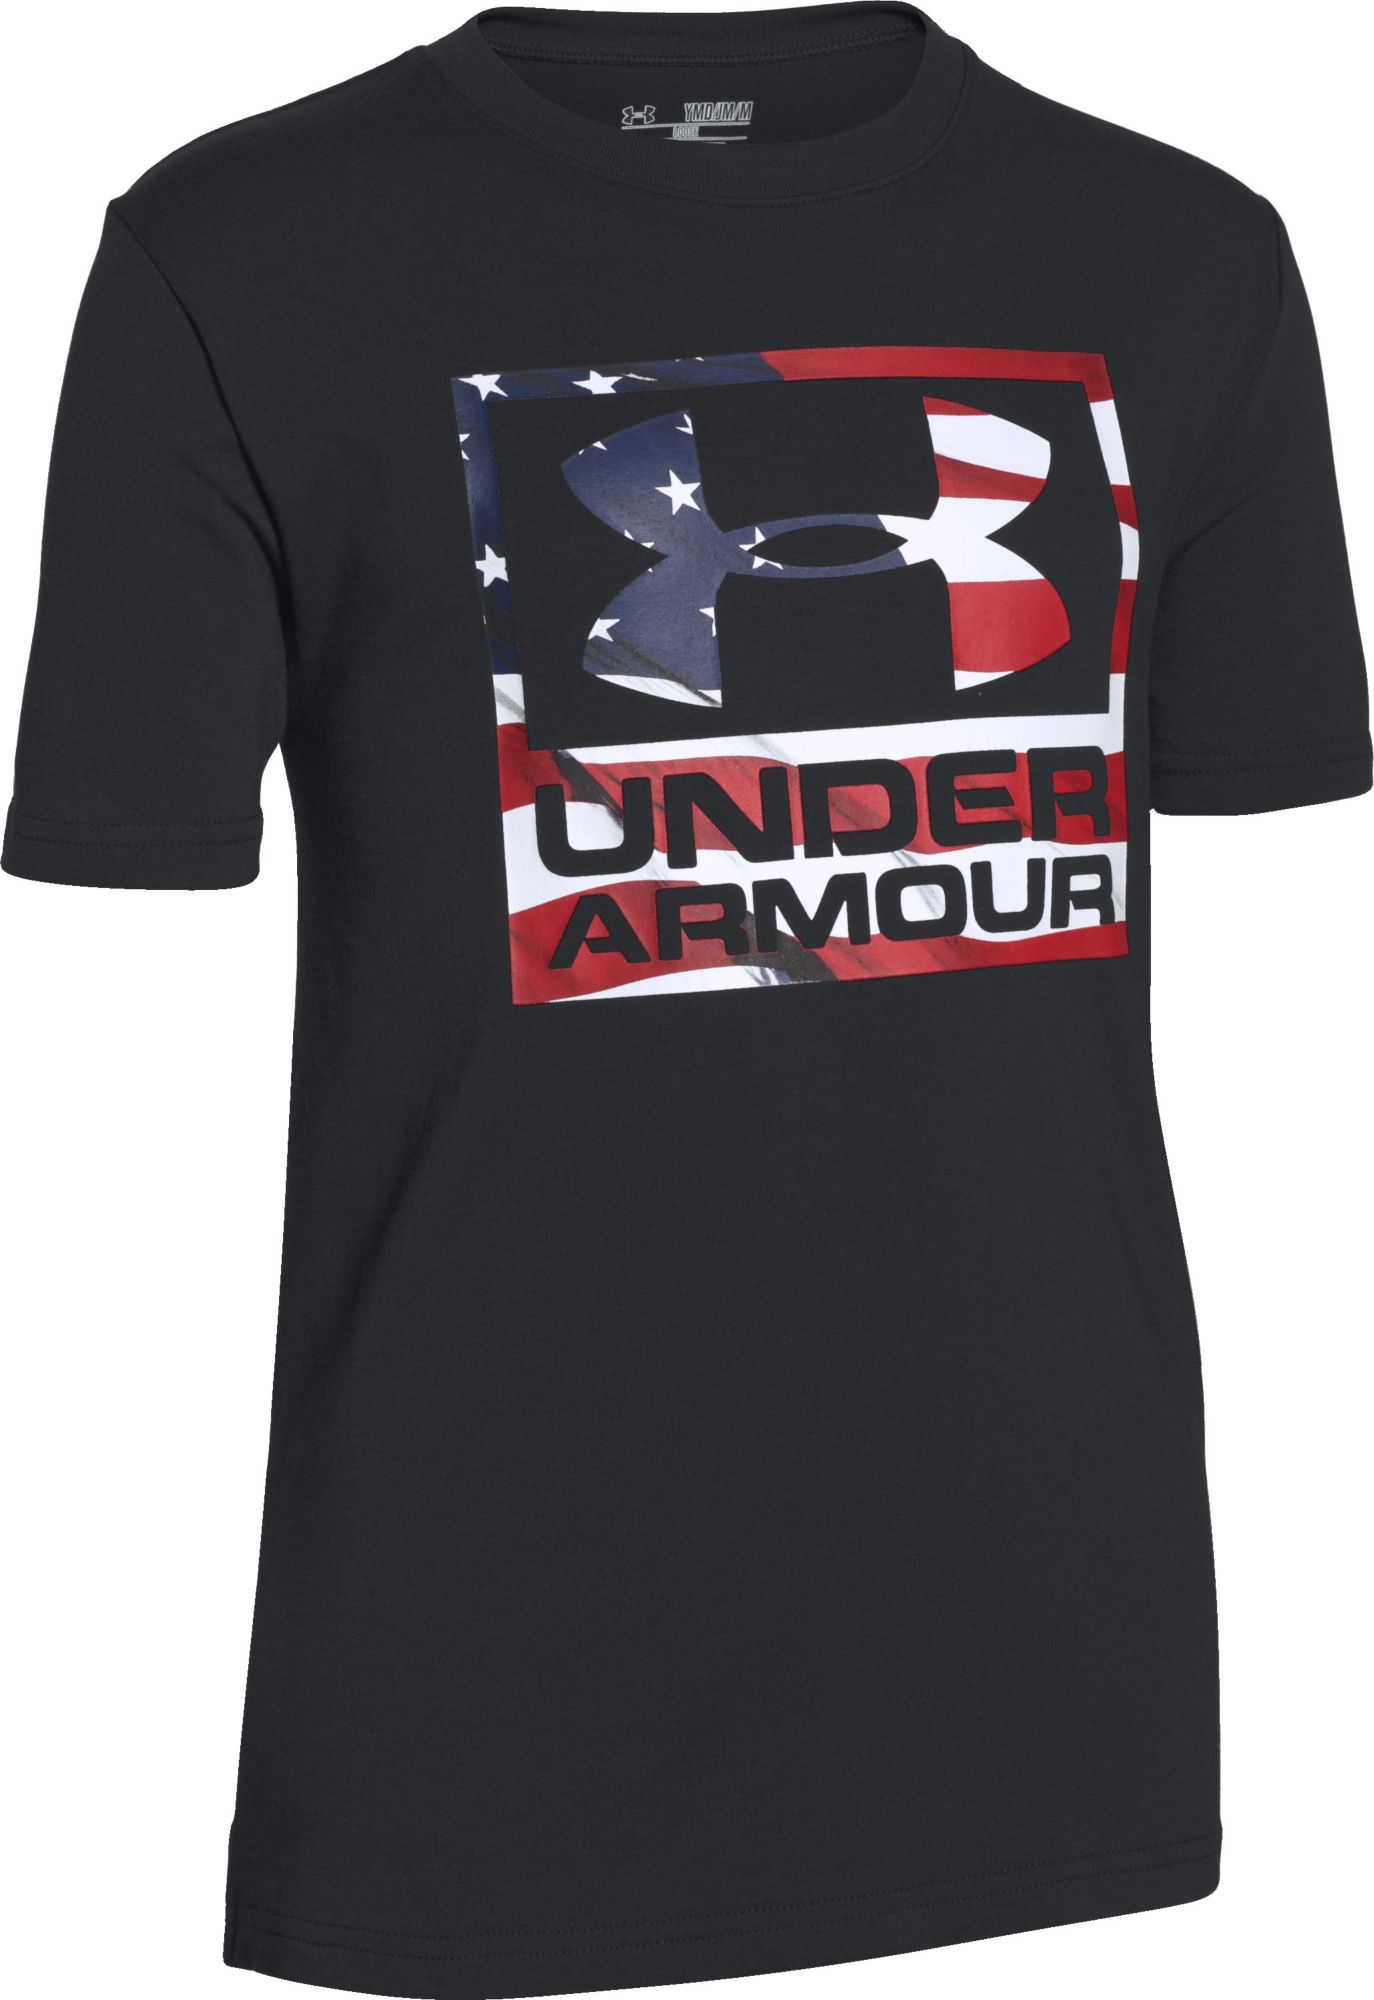 Cheap Under Armor T Shirts Rldm - police shirt roblox code rldm